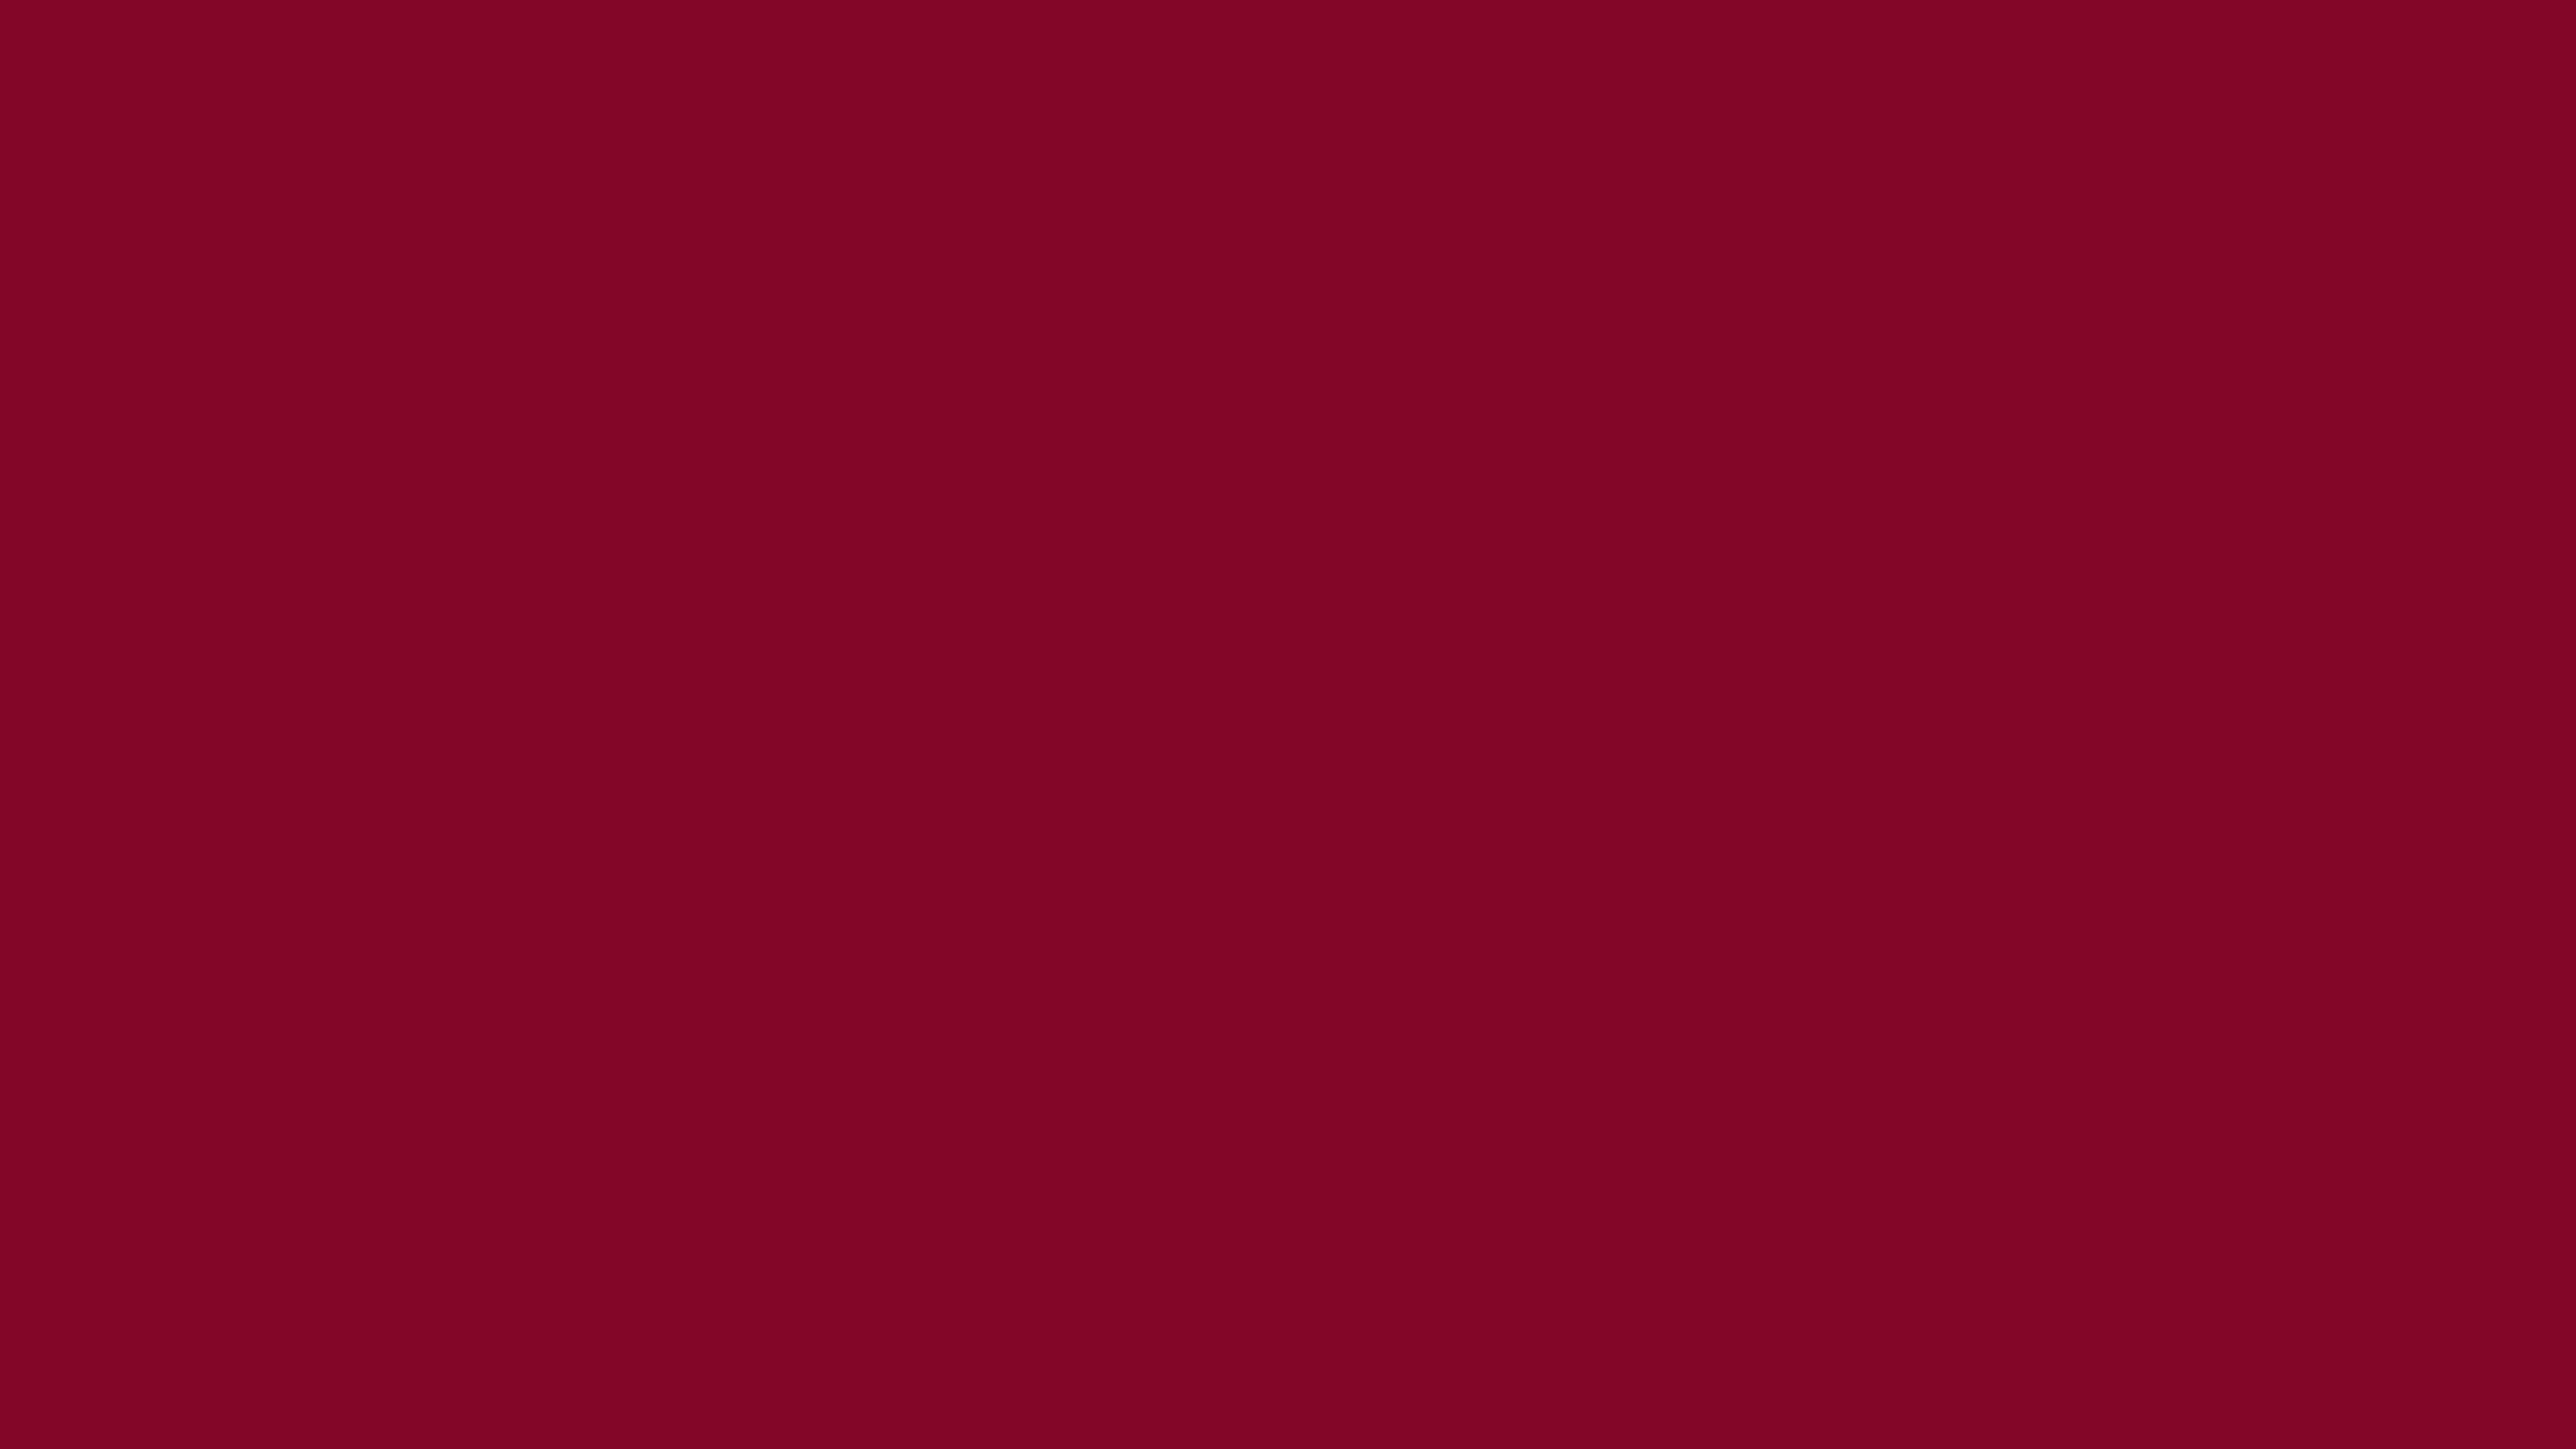 Wine Red ( similar ) Color | 830527 information | Hsl | Rgb | Pantone